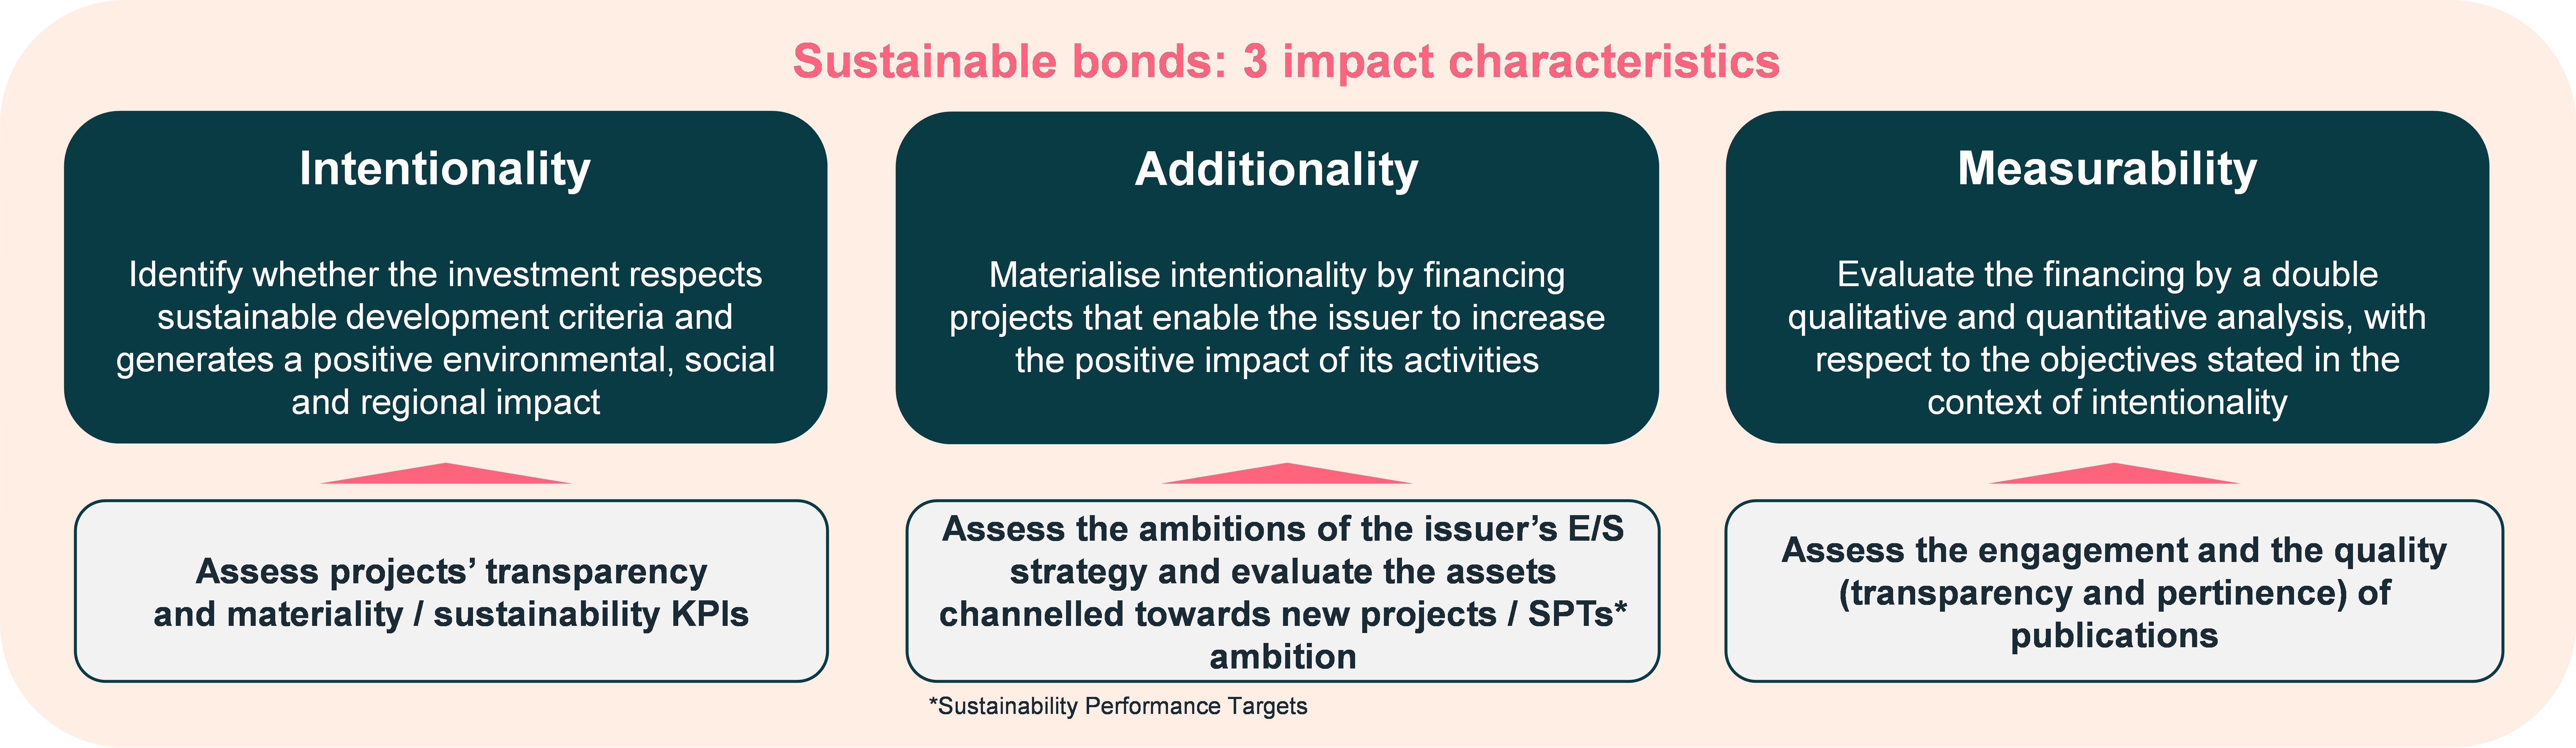 sustainable-bonds-3-impact-characteristics